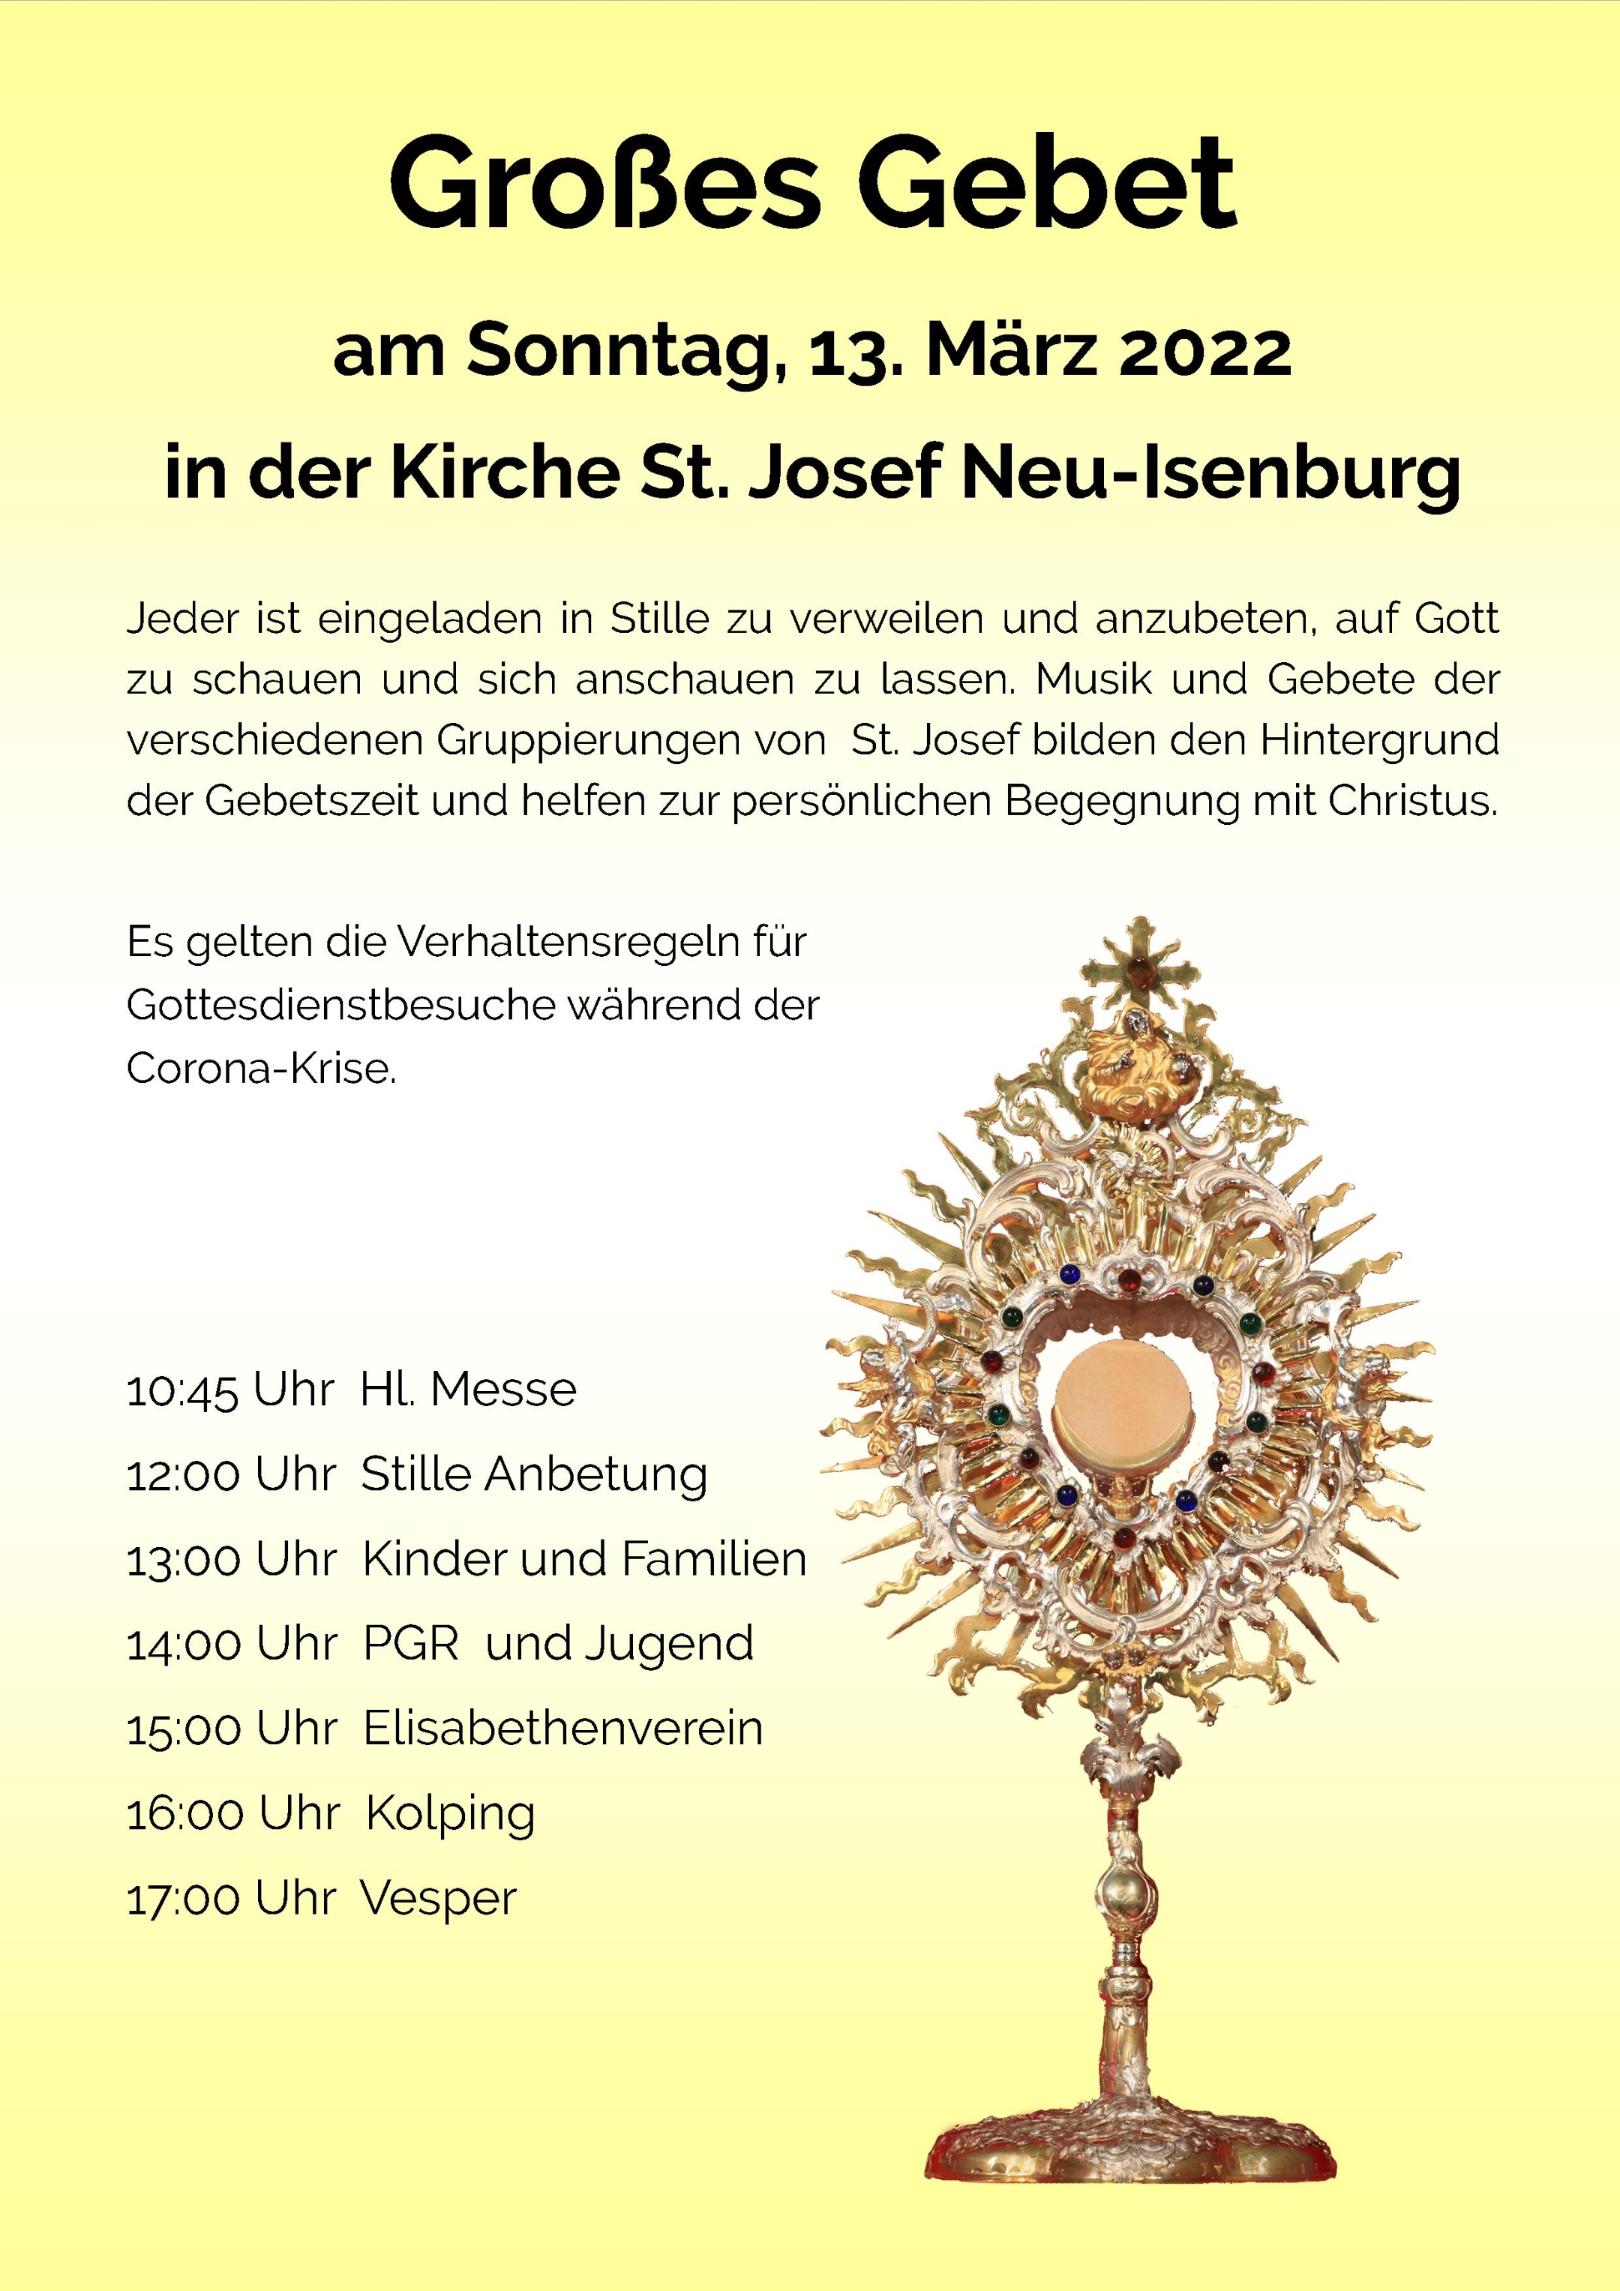 Großes Gebet 2022 in St. Josef (c) D. Thiel